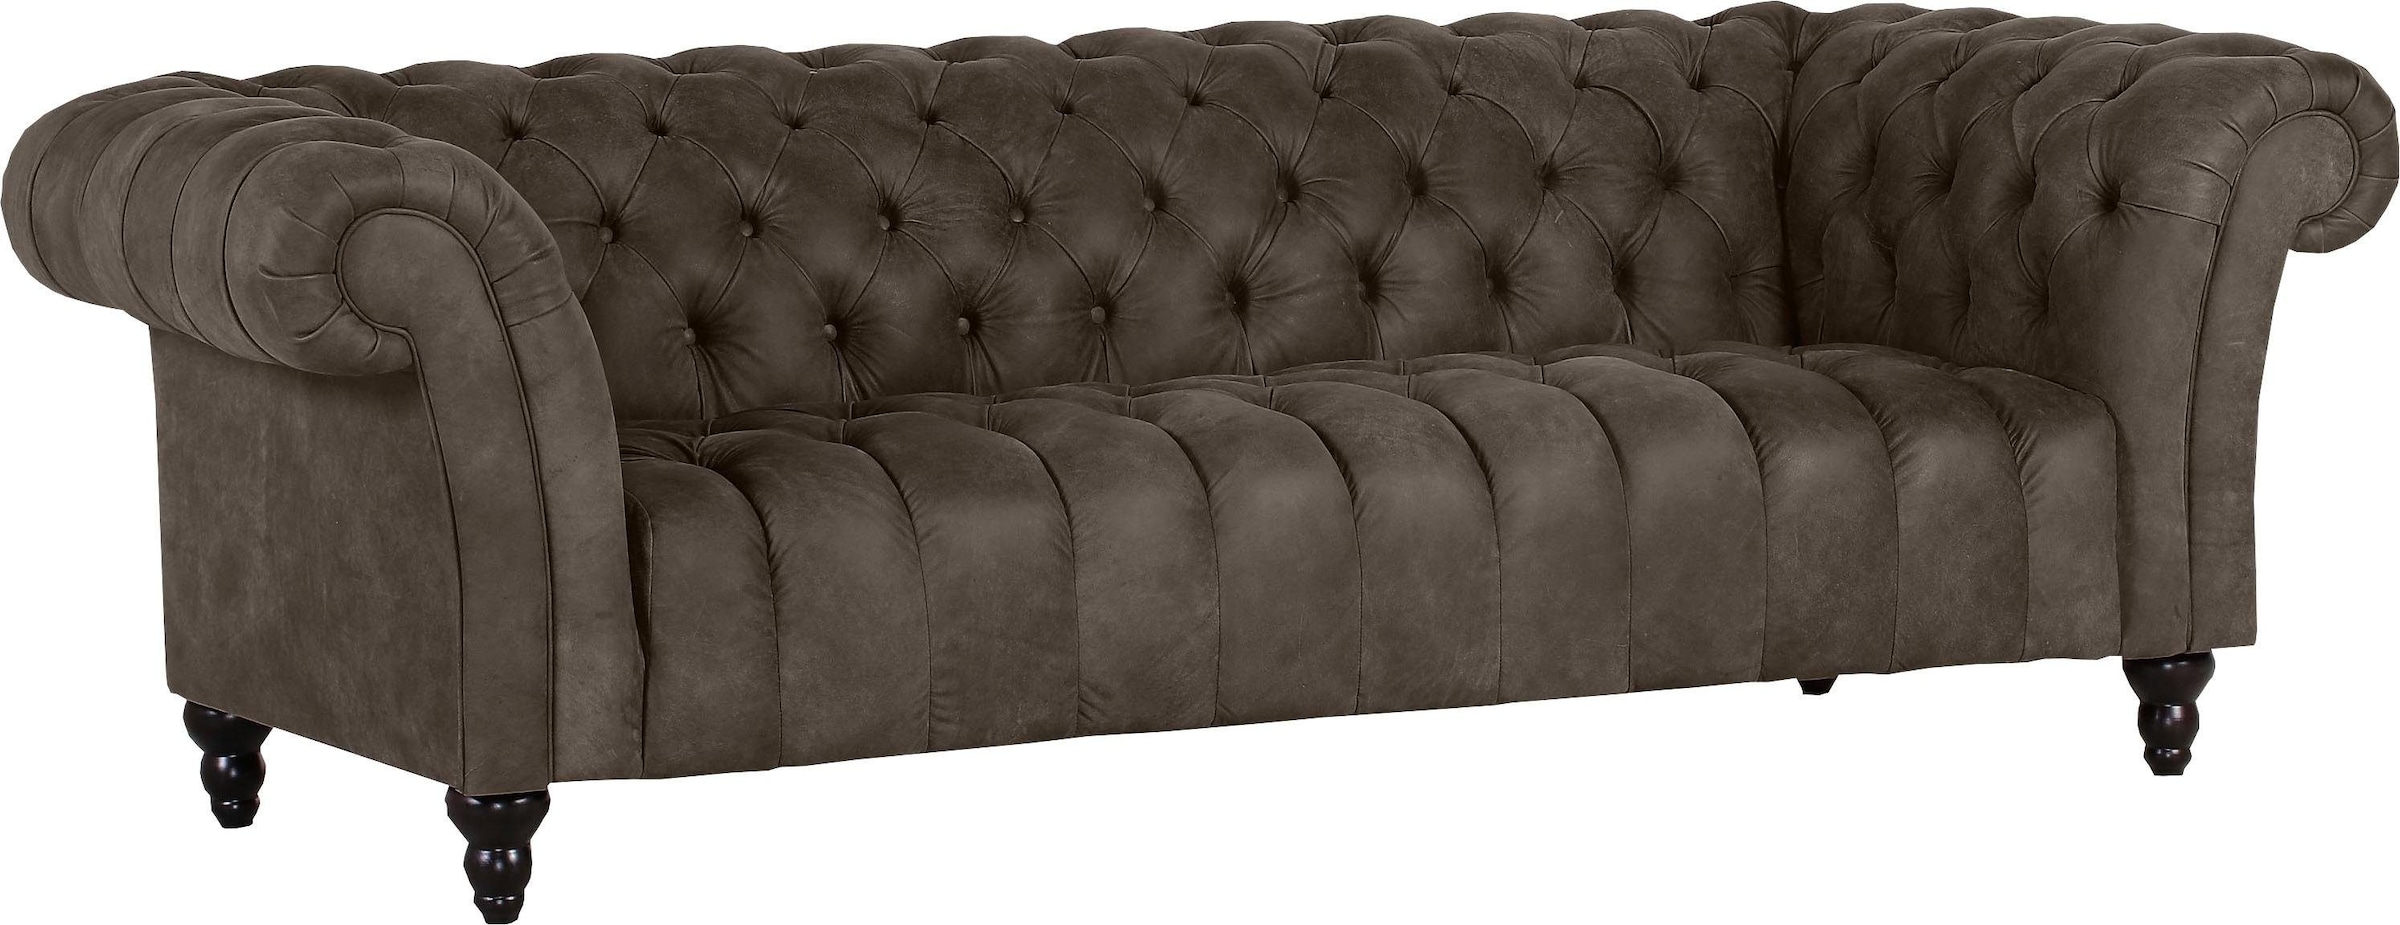 Big-Sofa »Amazonas«, aus Anilinleder